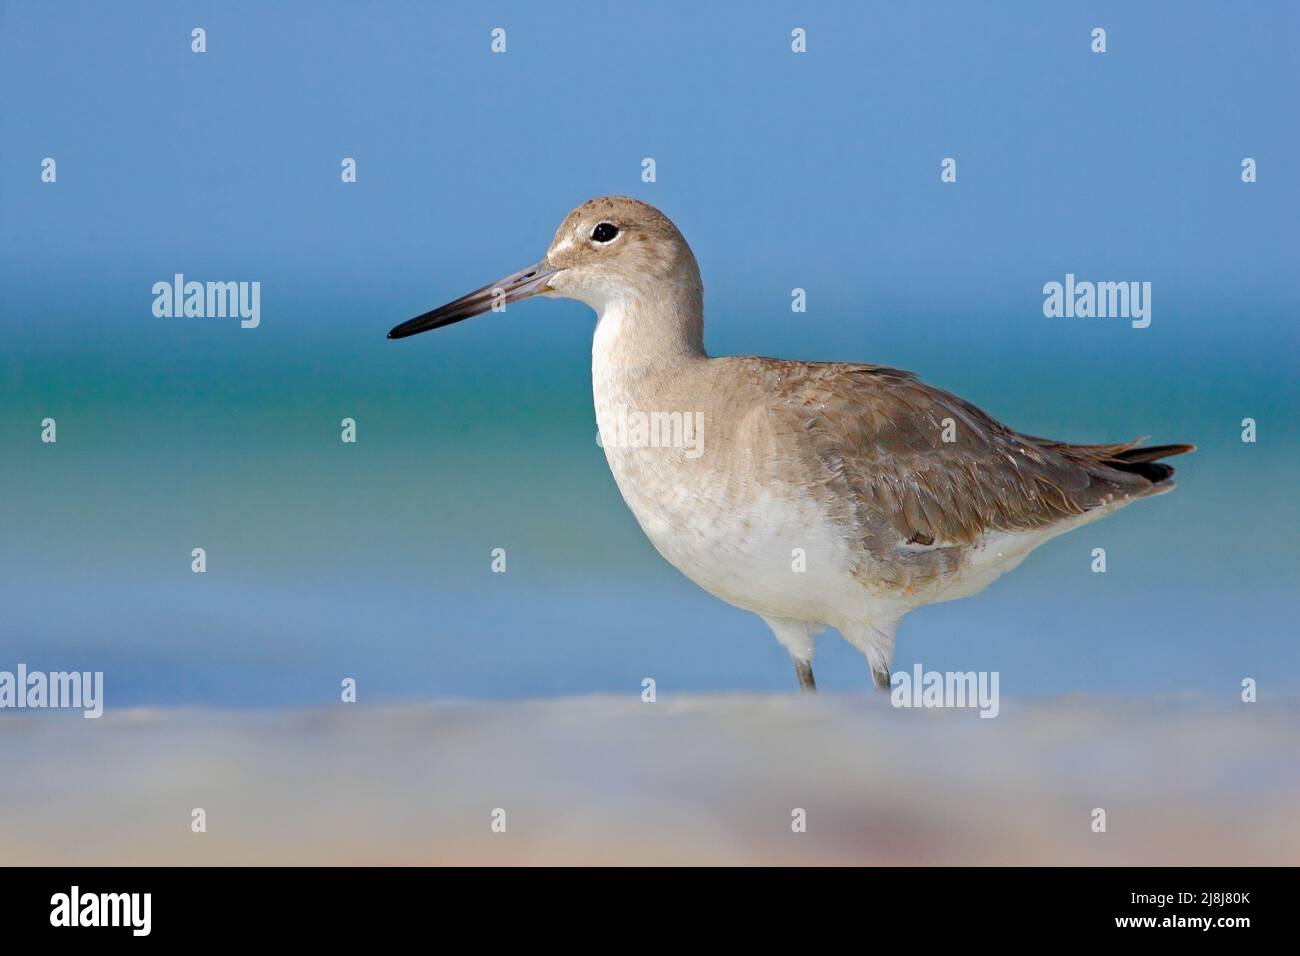 Animal on the ocean coast. White bird in the sand beach. Beautiful bird from Florida, USA. Bird with ocean wave. Blue surface with bird. Shore bird Wi Stock Photo